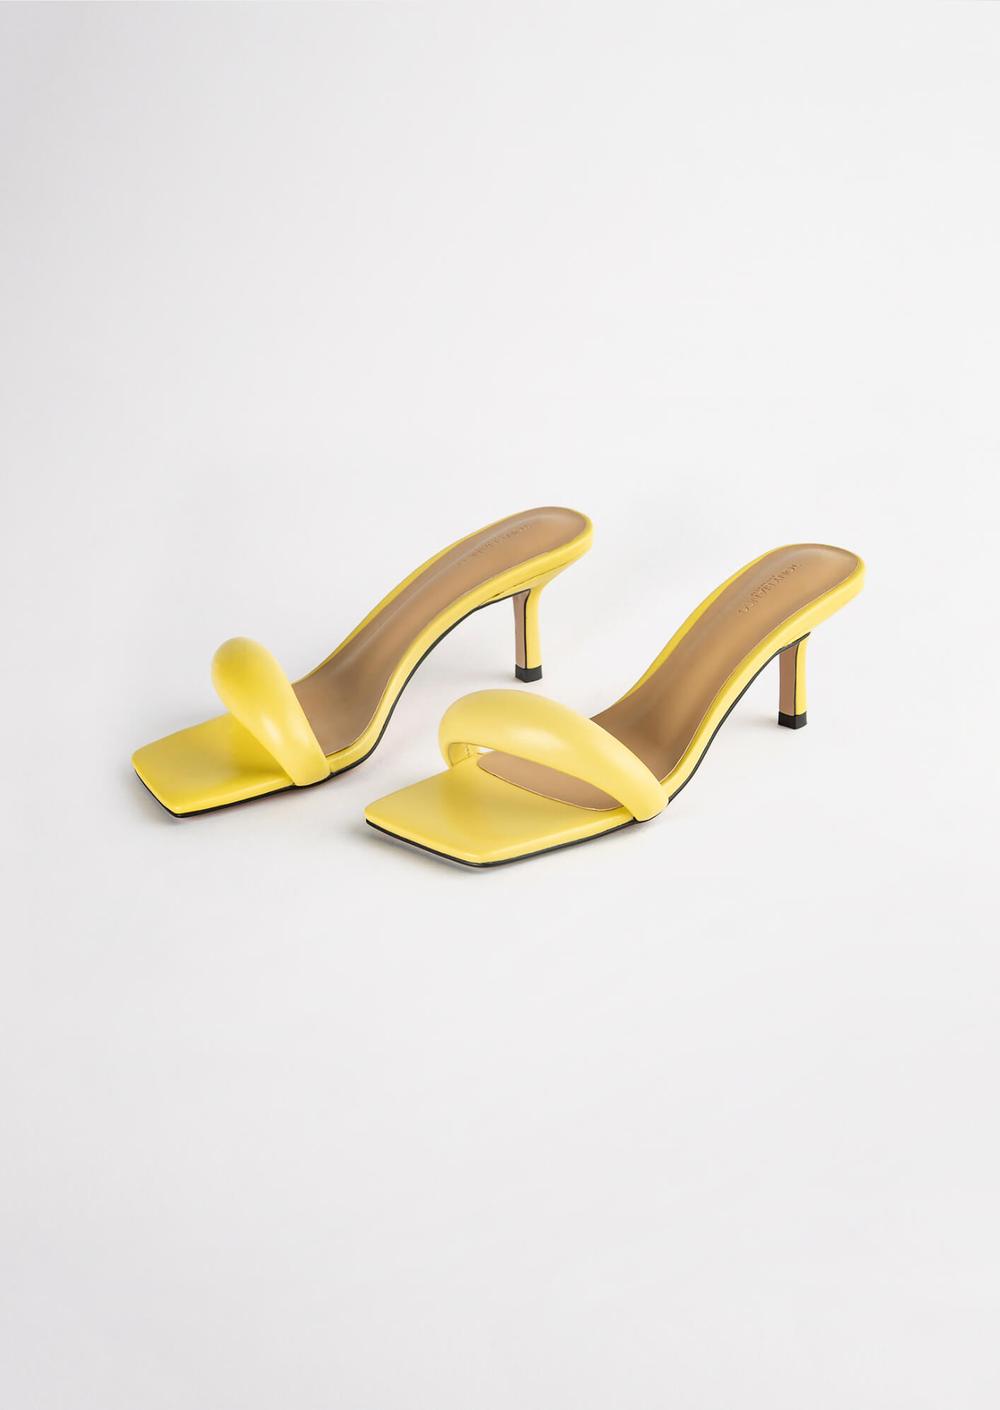 ANGEL SLIP ON - TONY BIANCO - 10, 5, 6, 6.5, 7, 7.5, 8, 8.5, 9, 9.5, musk, SLIP ON, stiletto, stiletto heel, womens footwear, YELLOW - Stomp Shoes Darwin